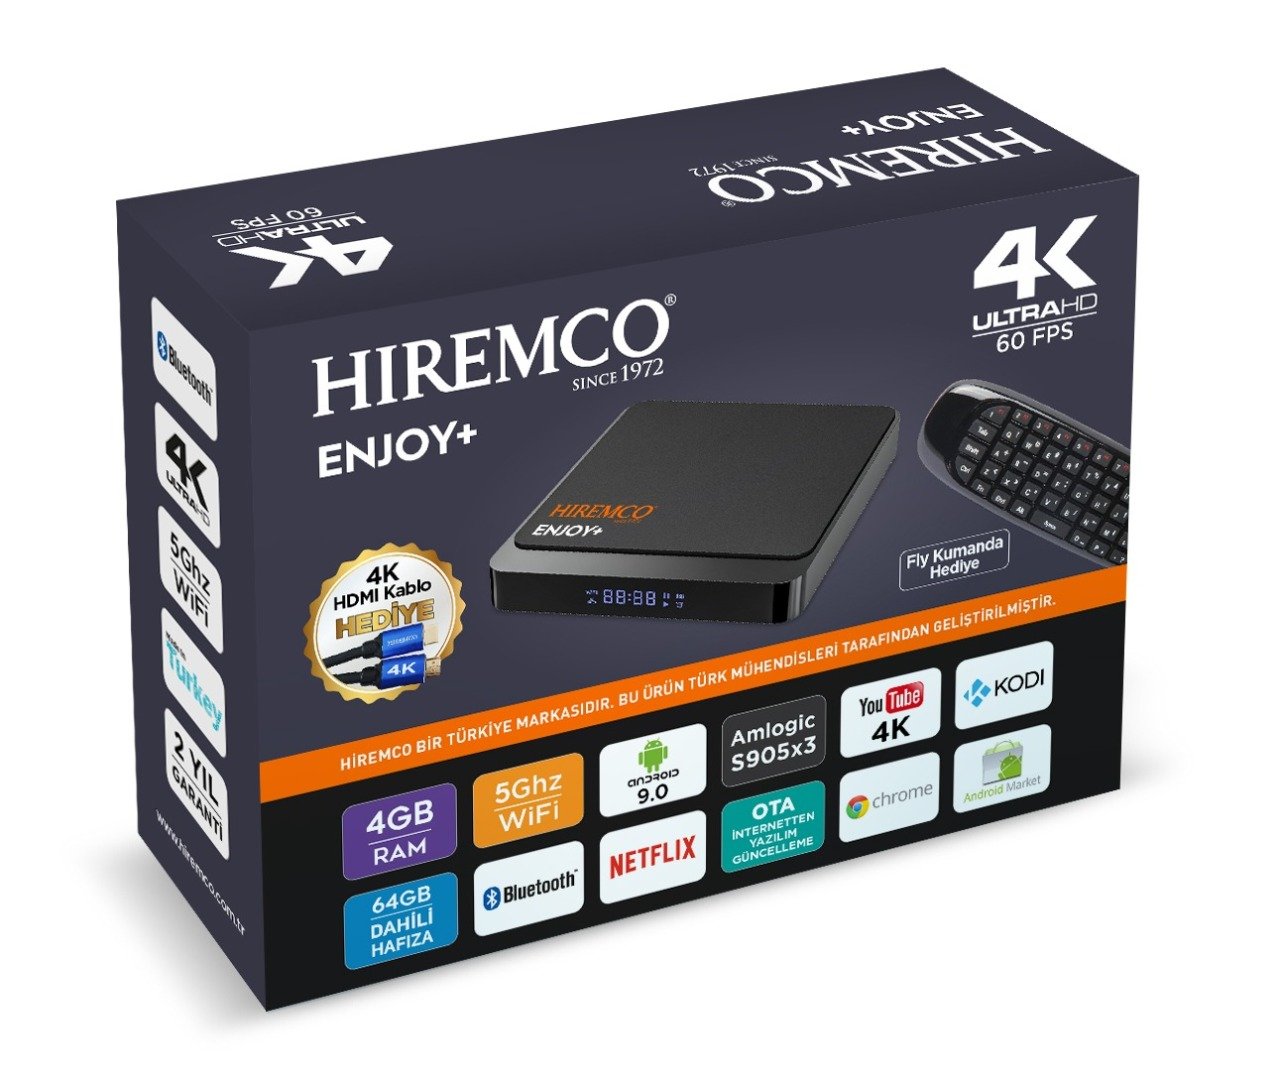 Hiremco Enjoy+ Android 4K Tv Box 4Gb Ram 64Gb Hafıza Çift Kumandalı